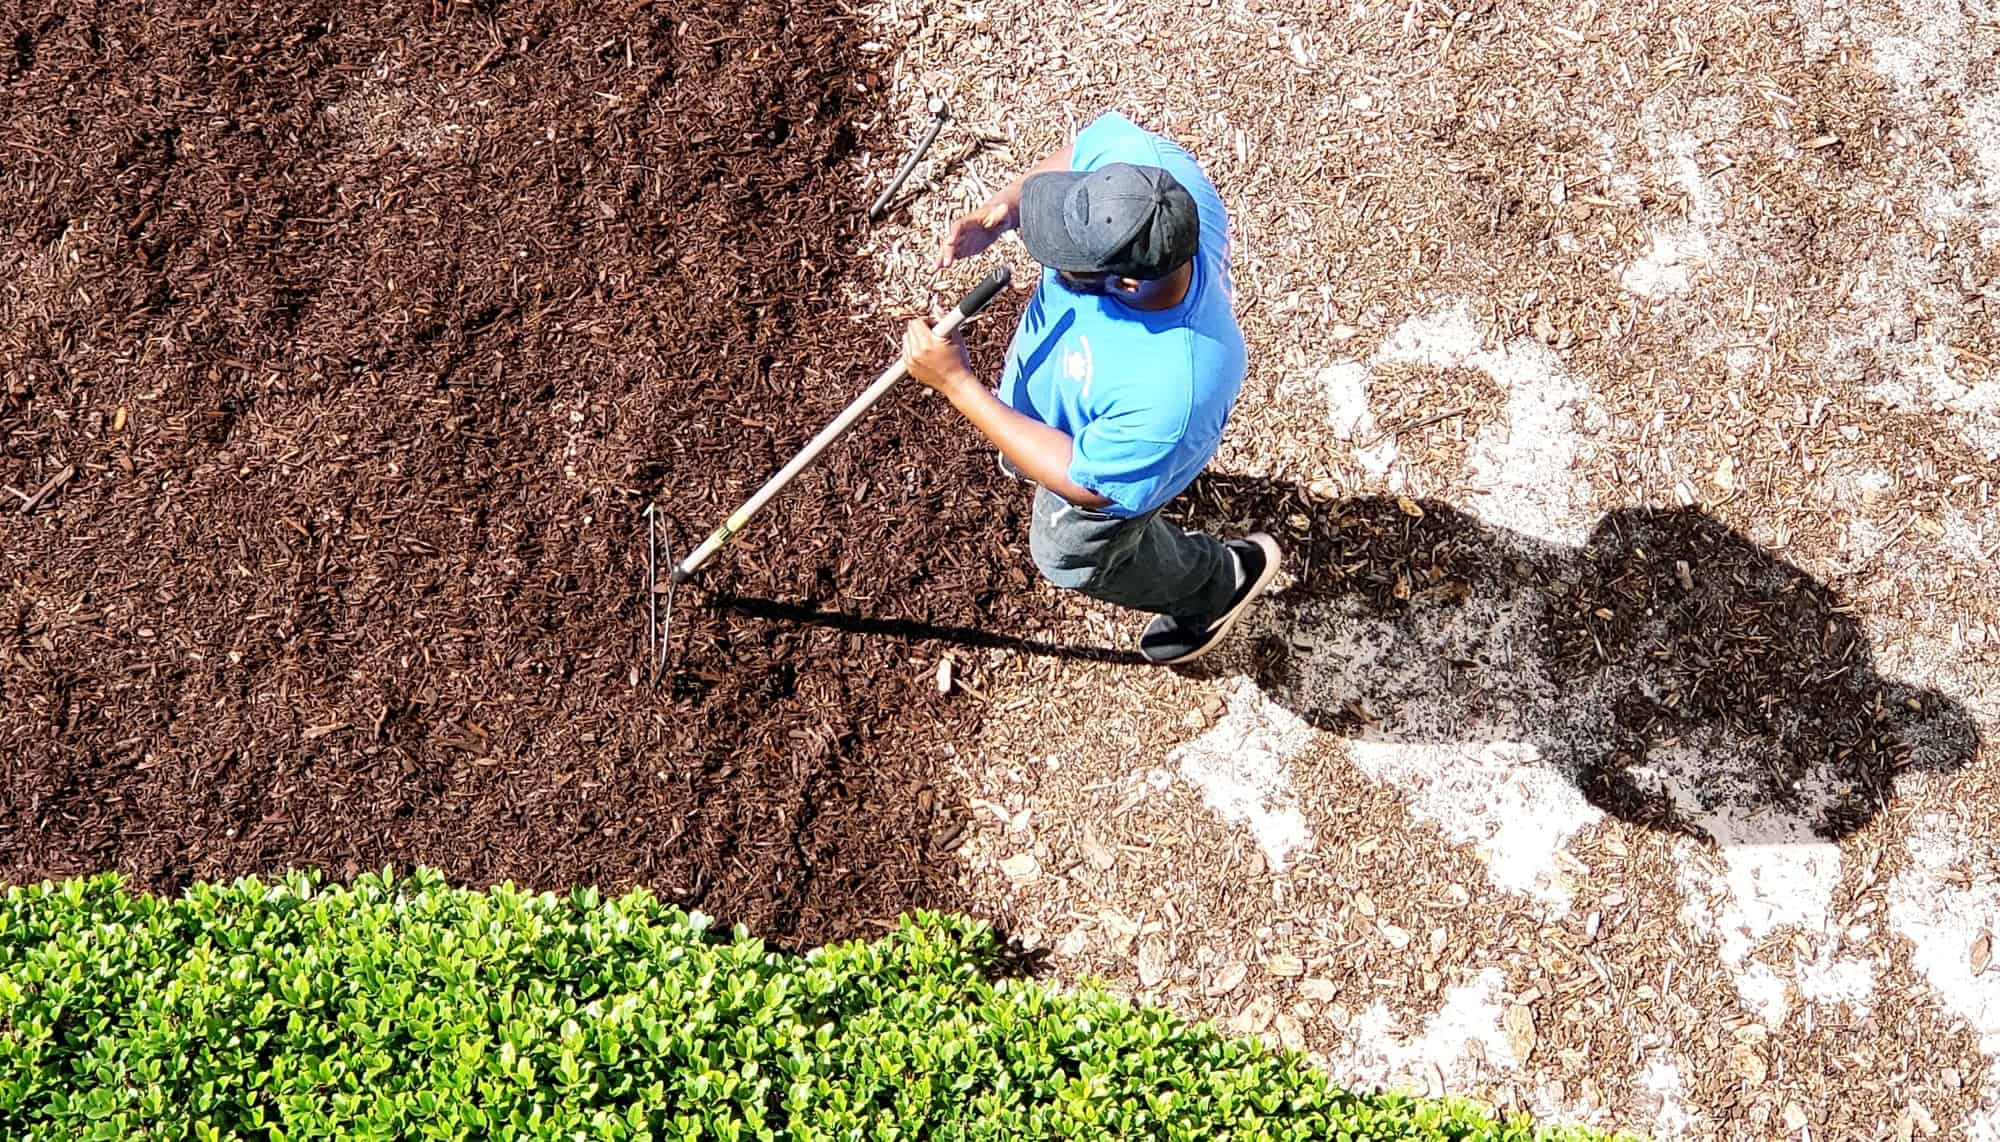 Yard man spreading mulch in outdoor garden area of a beach condo.